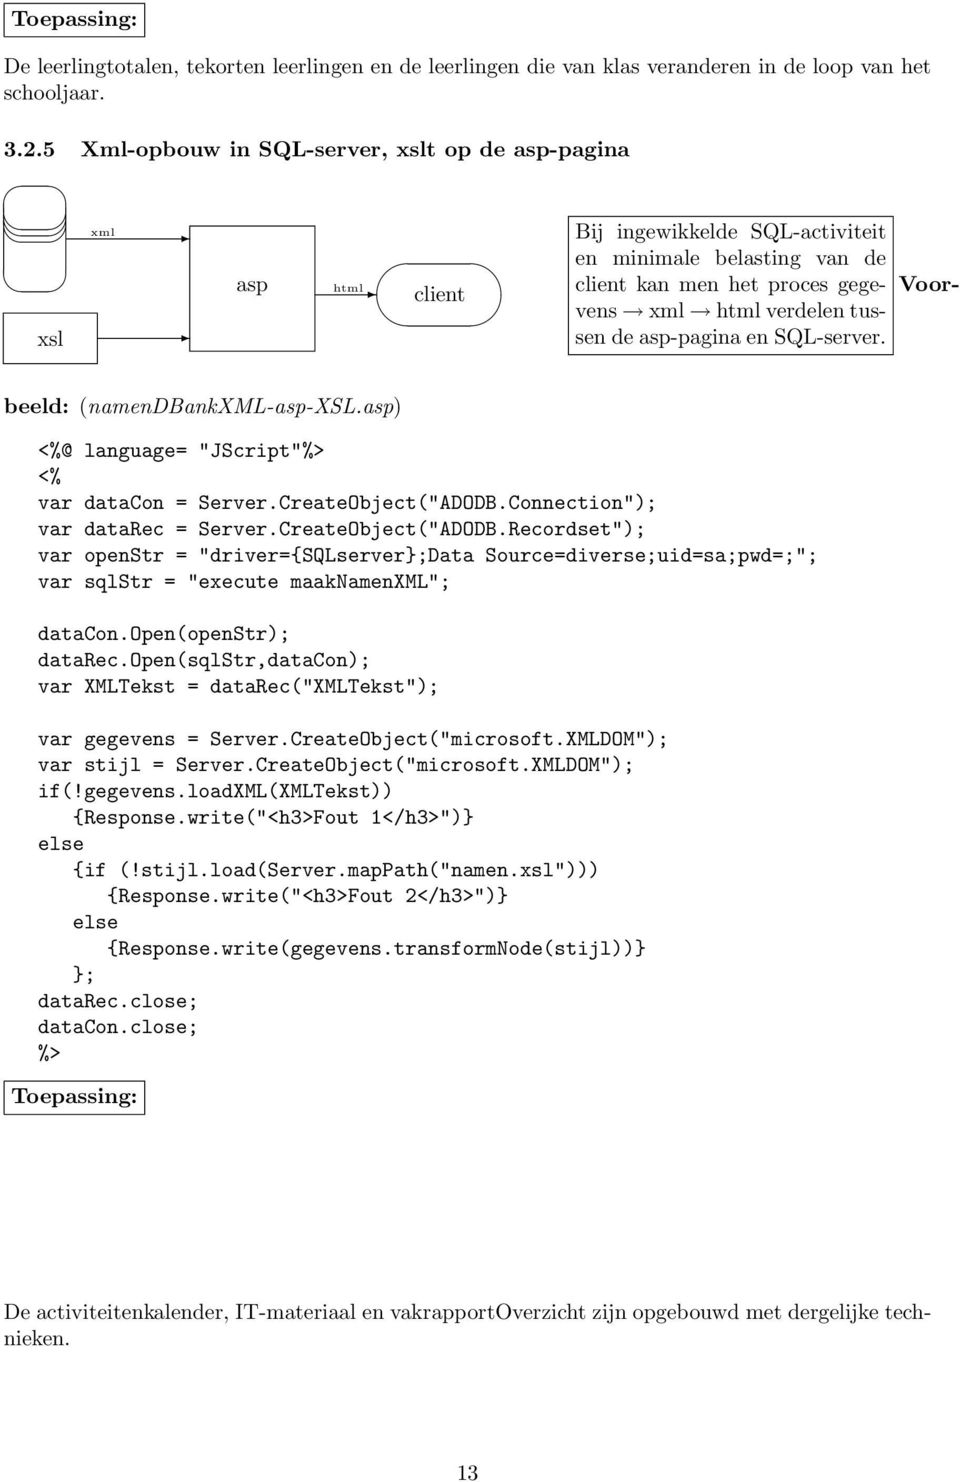 asp-pagina en SQL-server. Voorbeeld: (namendbankxml-asp-xsl.asp) @ language= "JScript" var datacon = Server.CreateObject("ADODB.